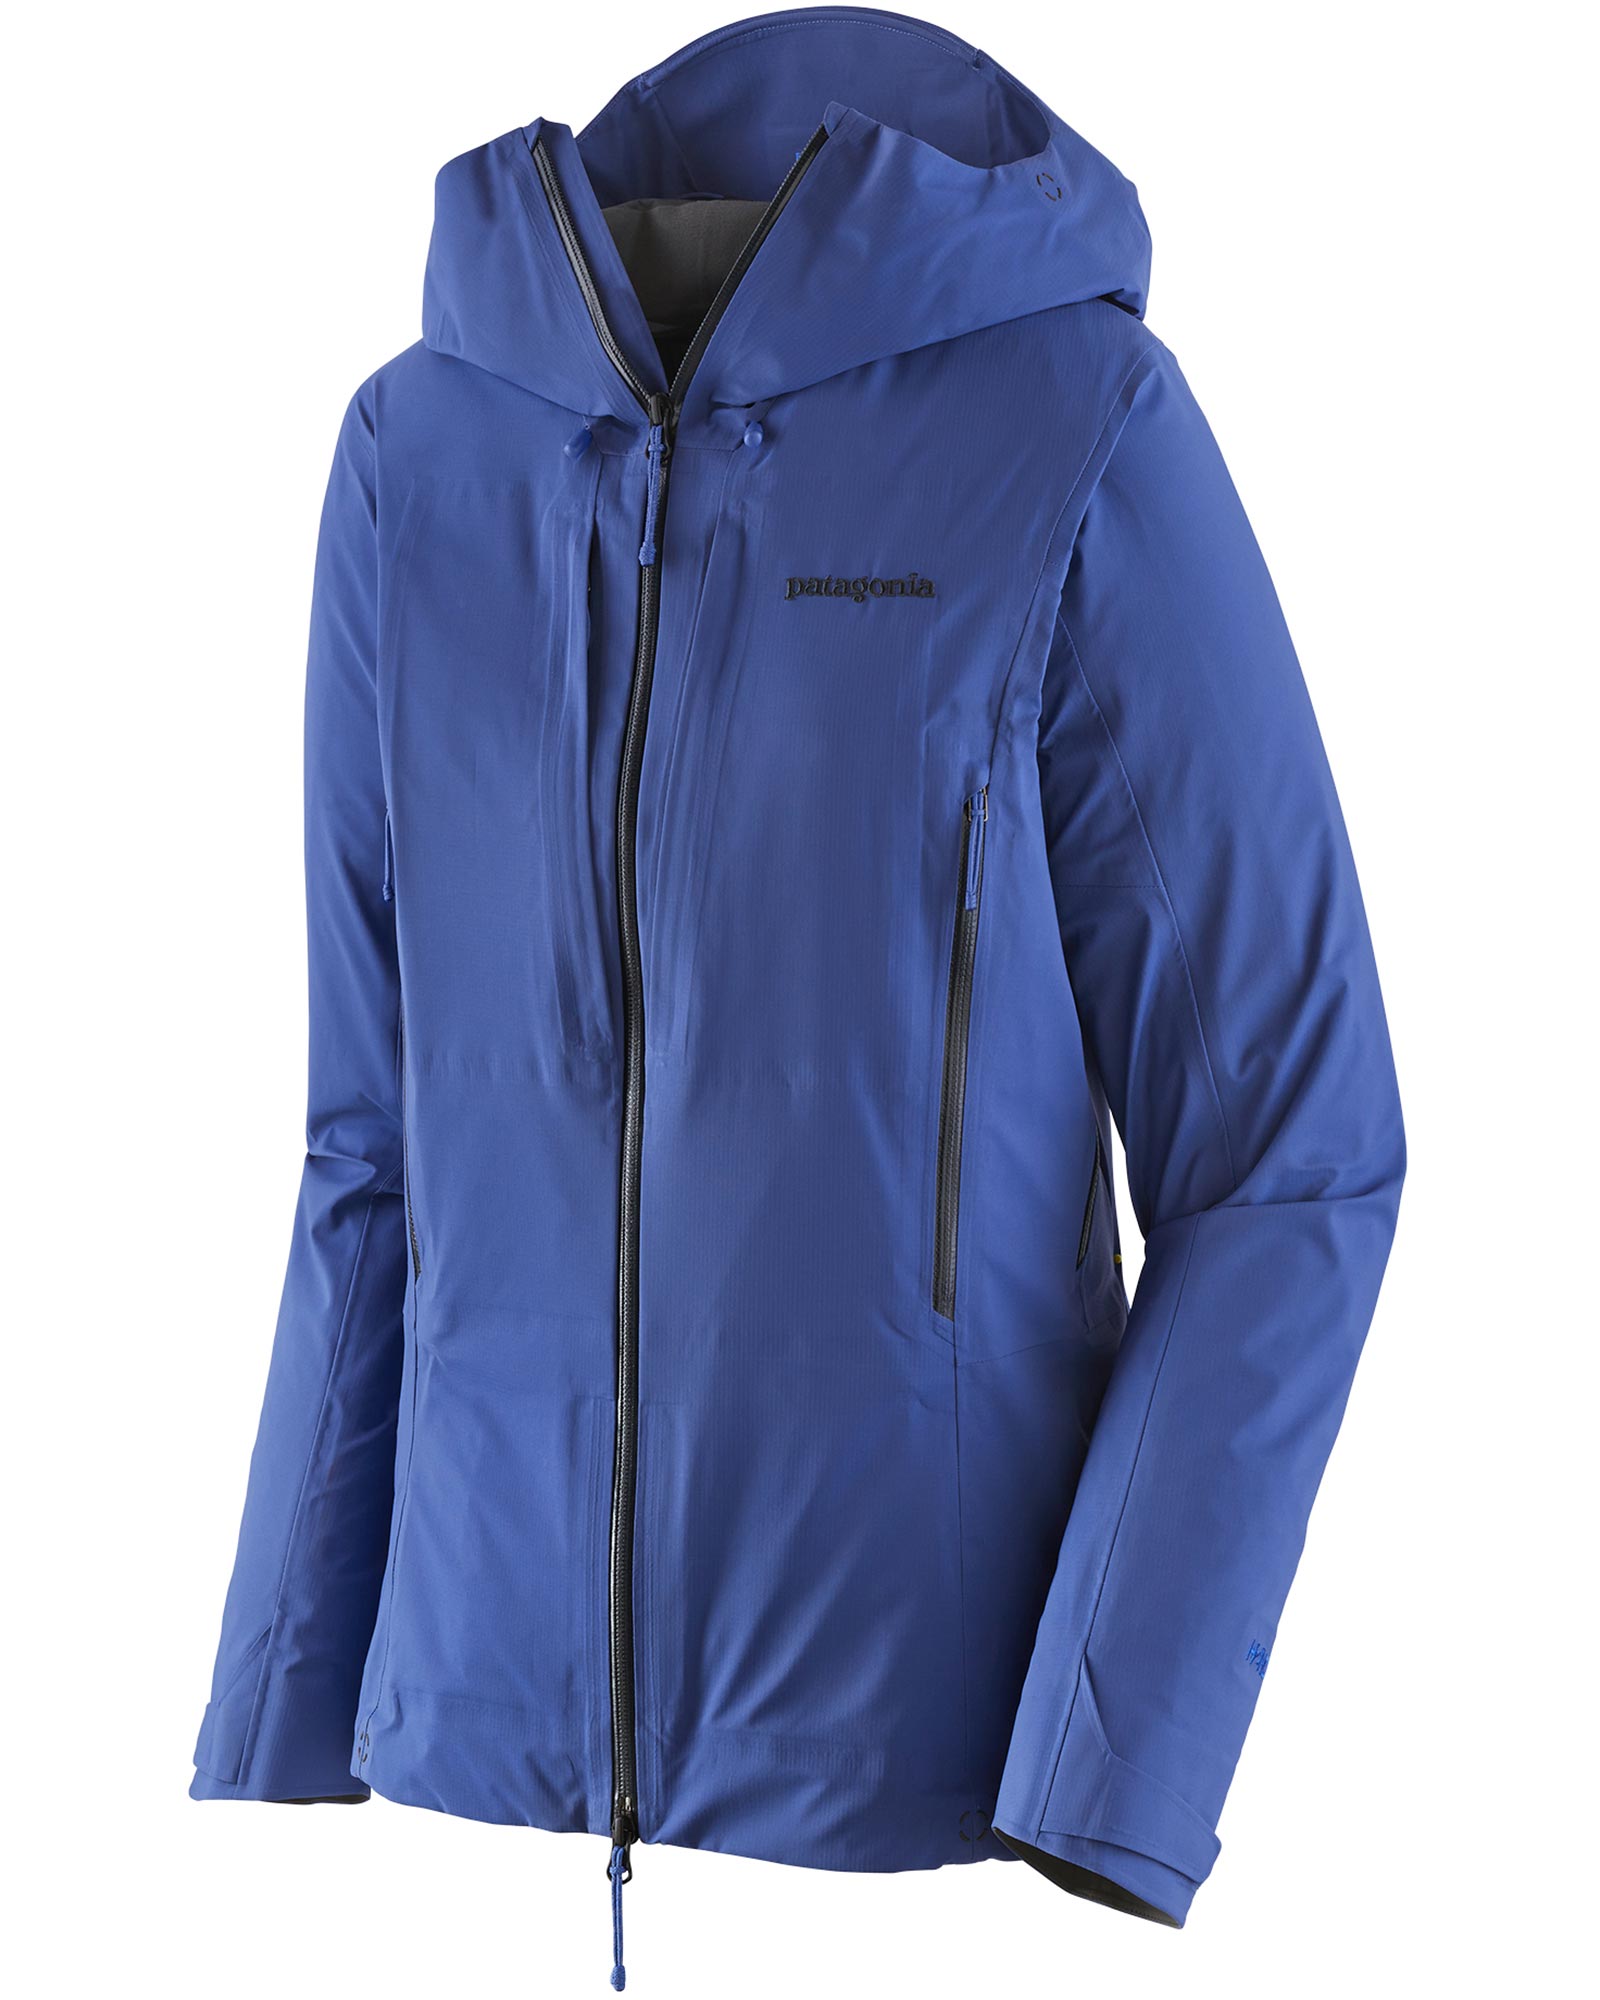 Patagonia Dual Aspect Women’s Jacket - Float Blue S